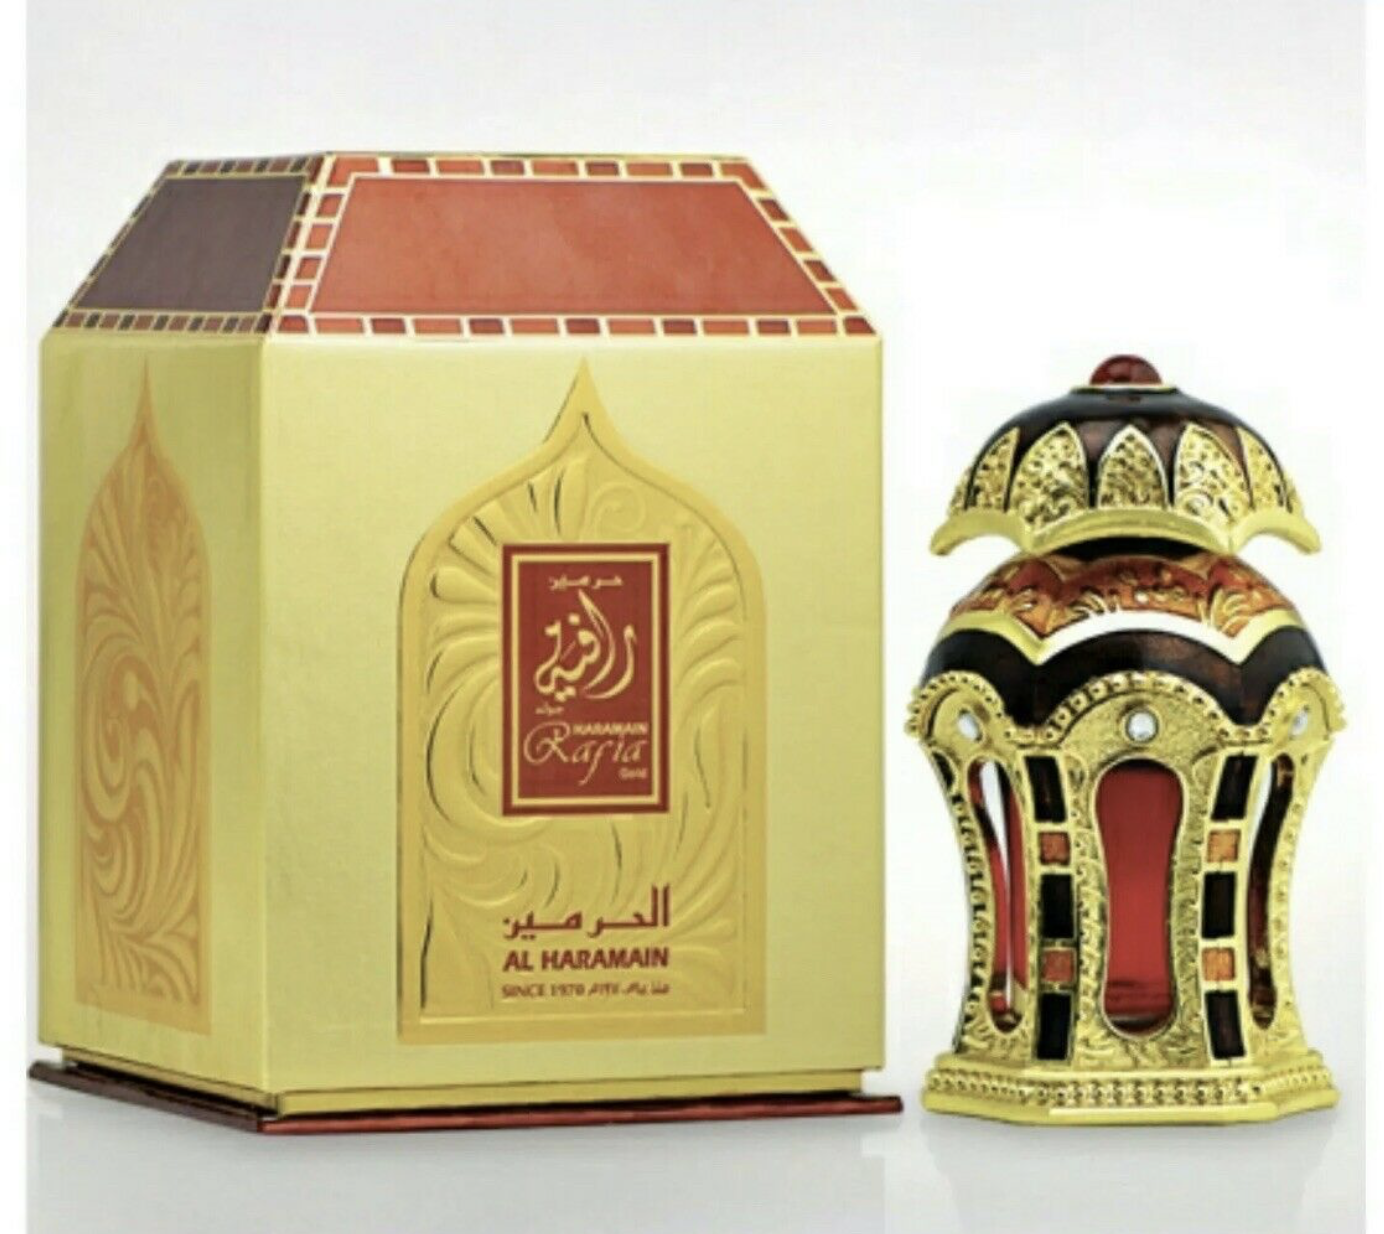 Rafia Gold By Al Haramain 20 ML Attar Oil Based Concentrated Perfume:USA SELLER.